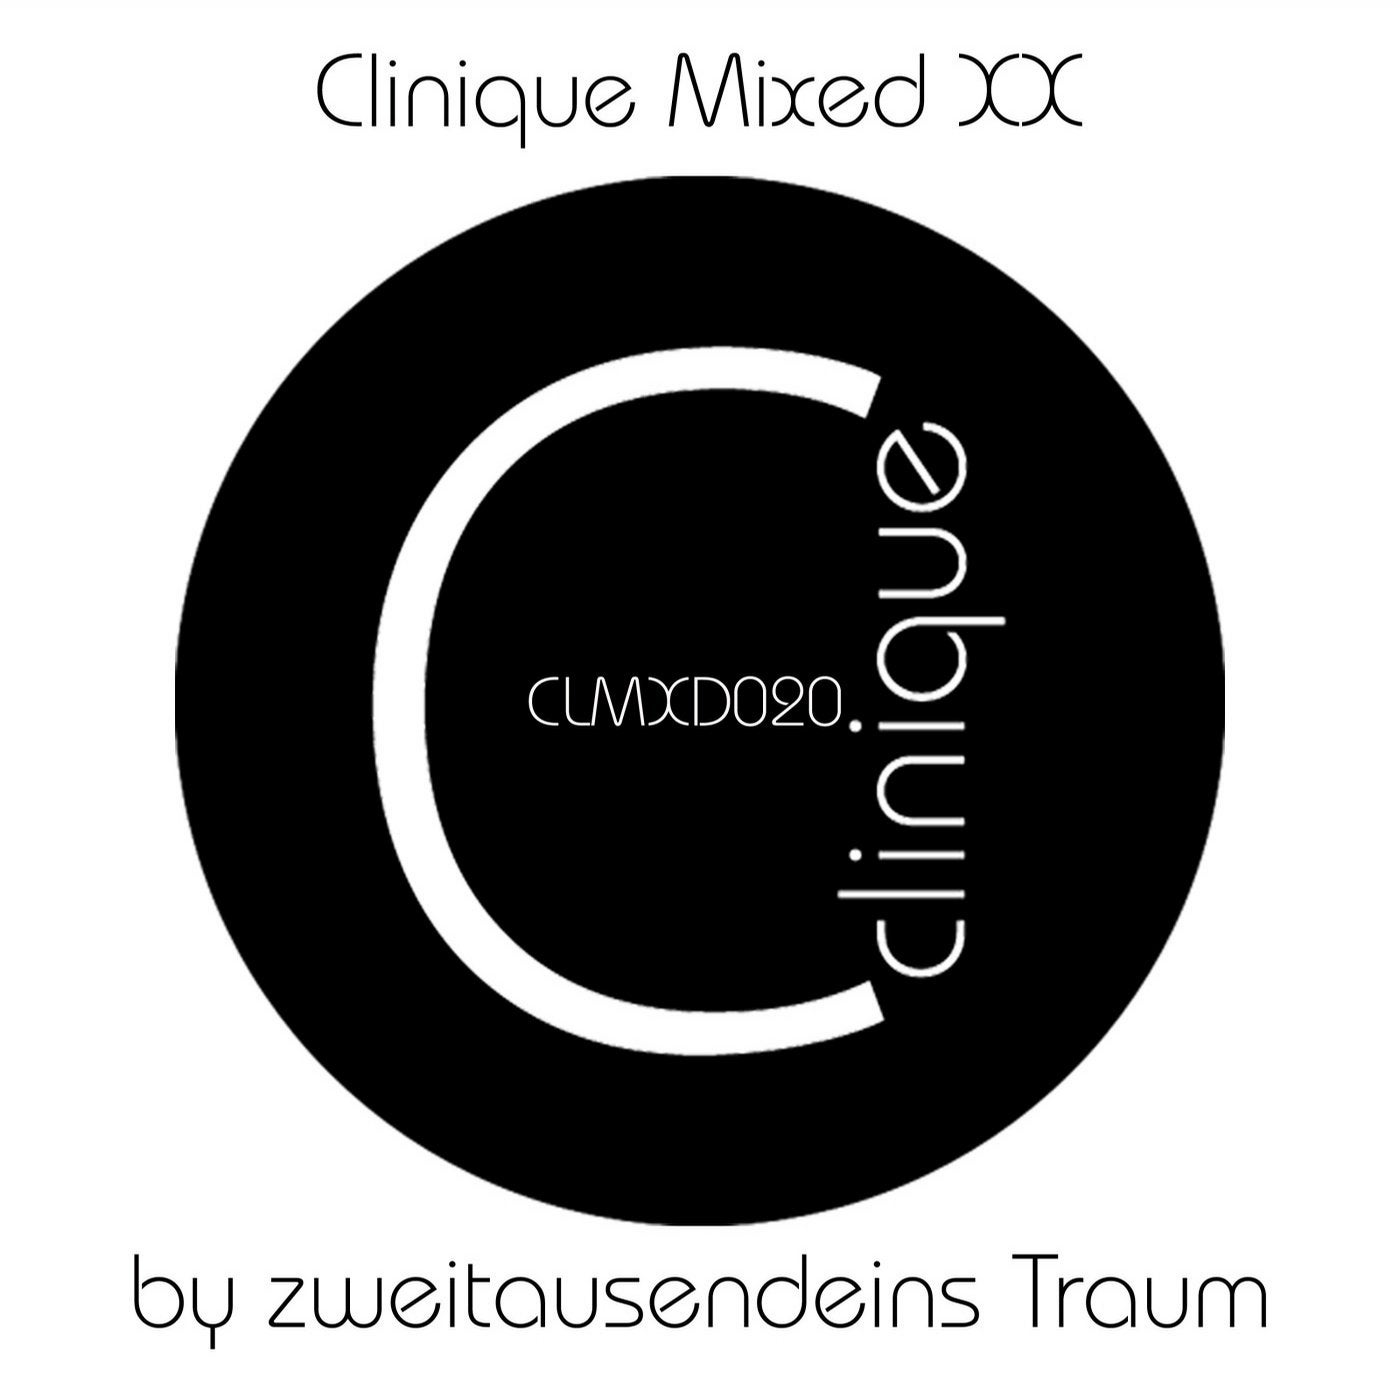 Clinique Mixed XX